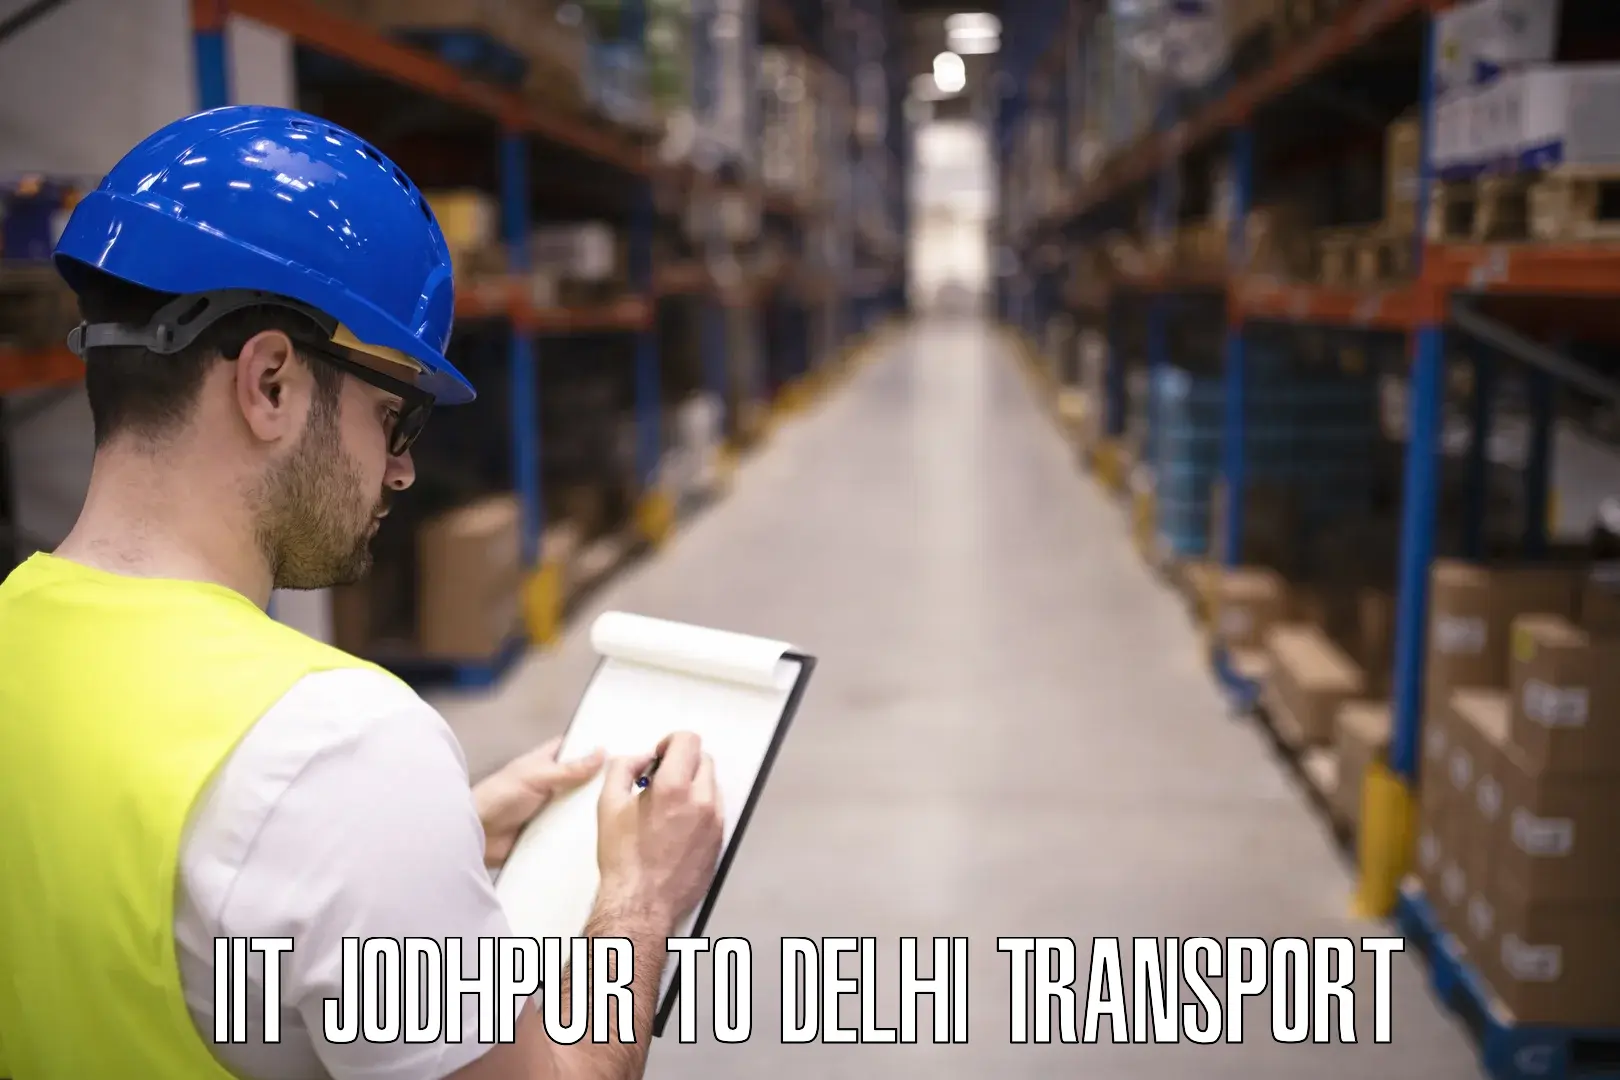 Daily transport service IIT Jodhpur to IIT Delhi